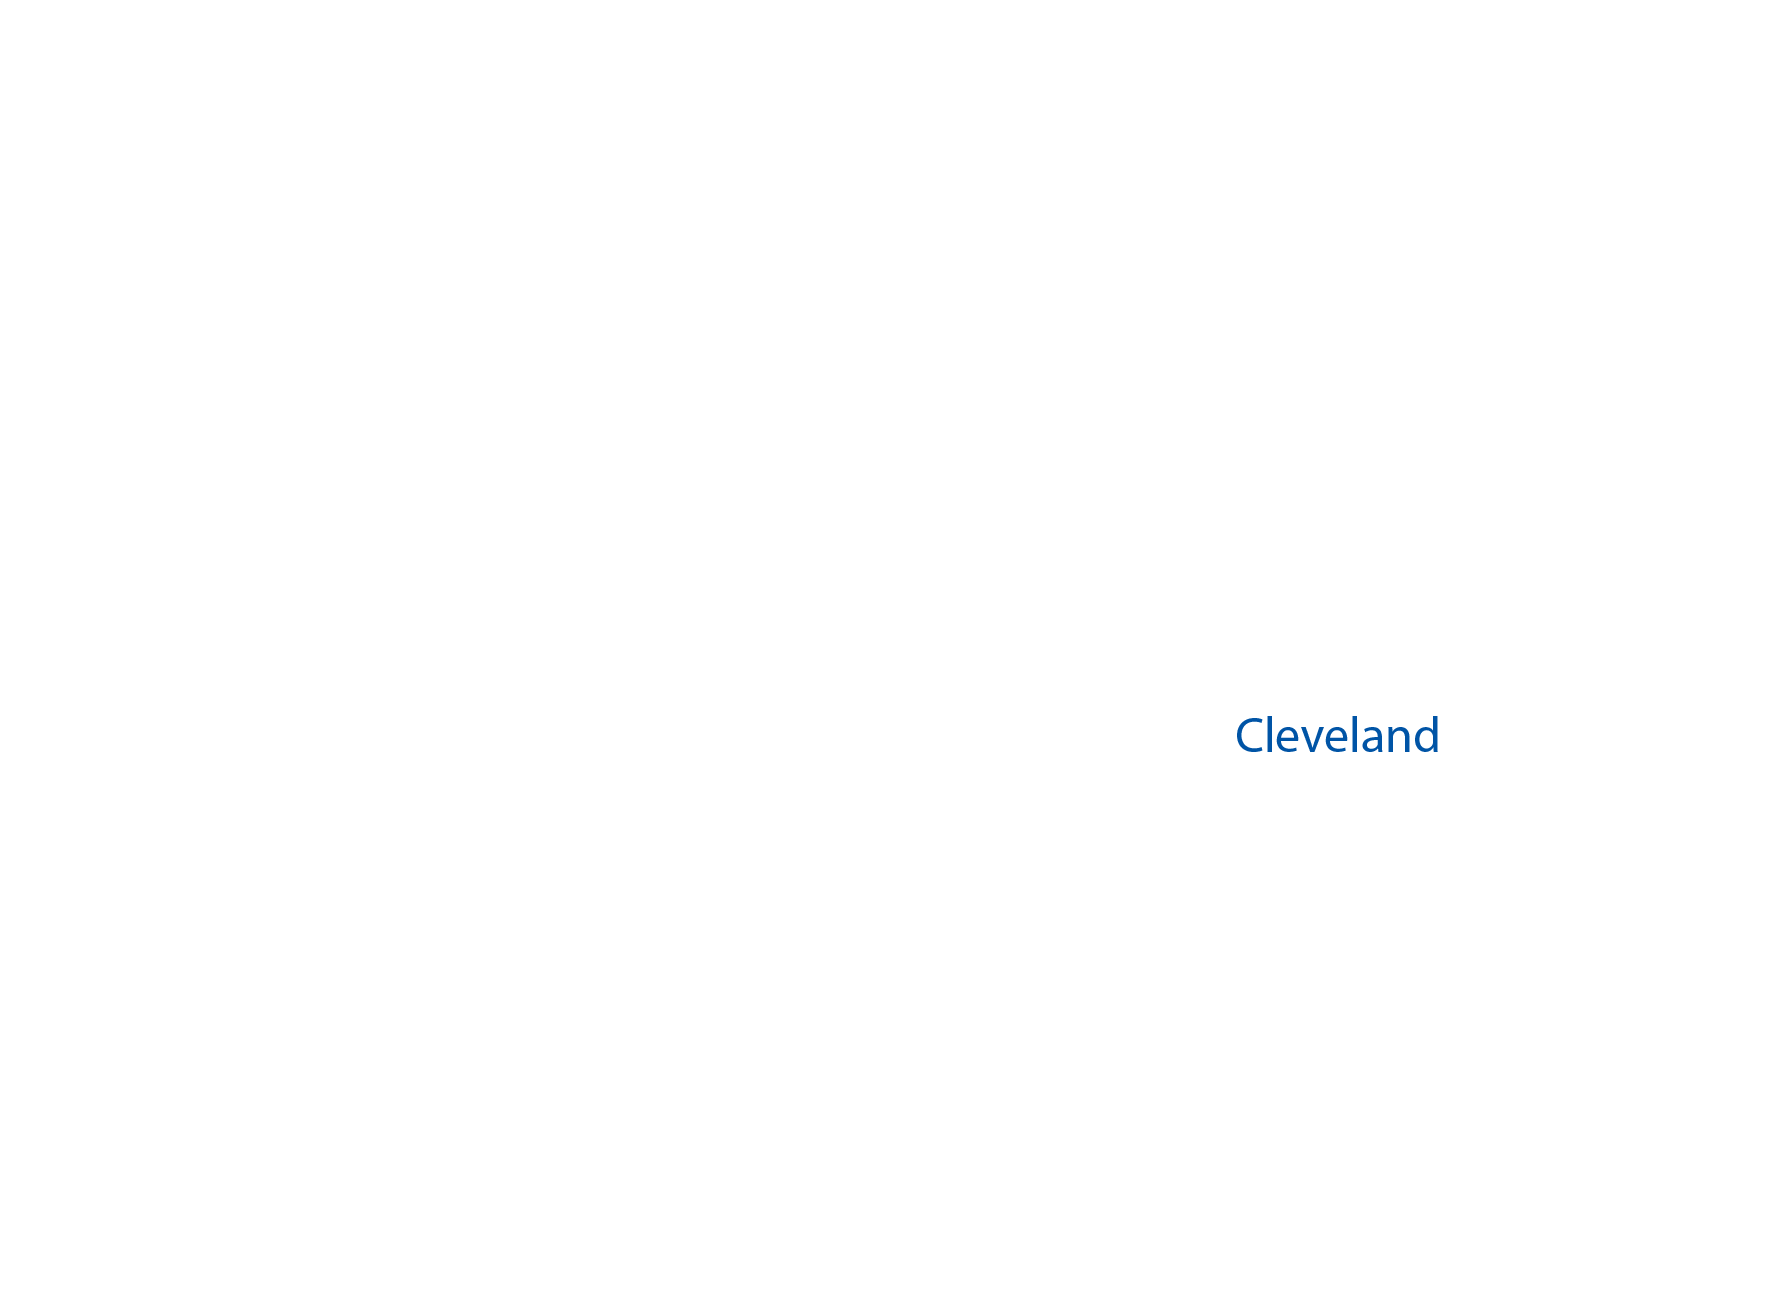 Cleveland label